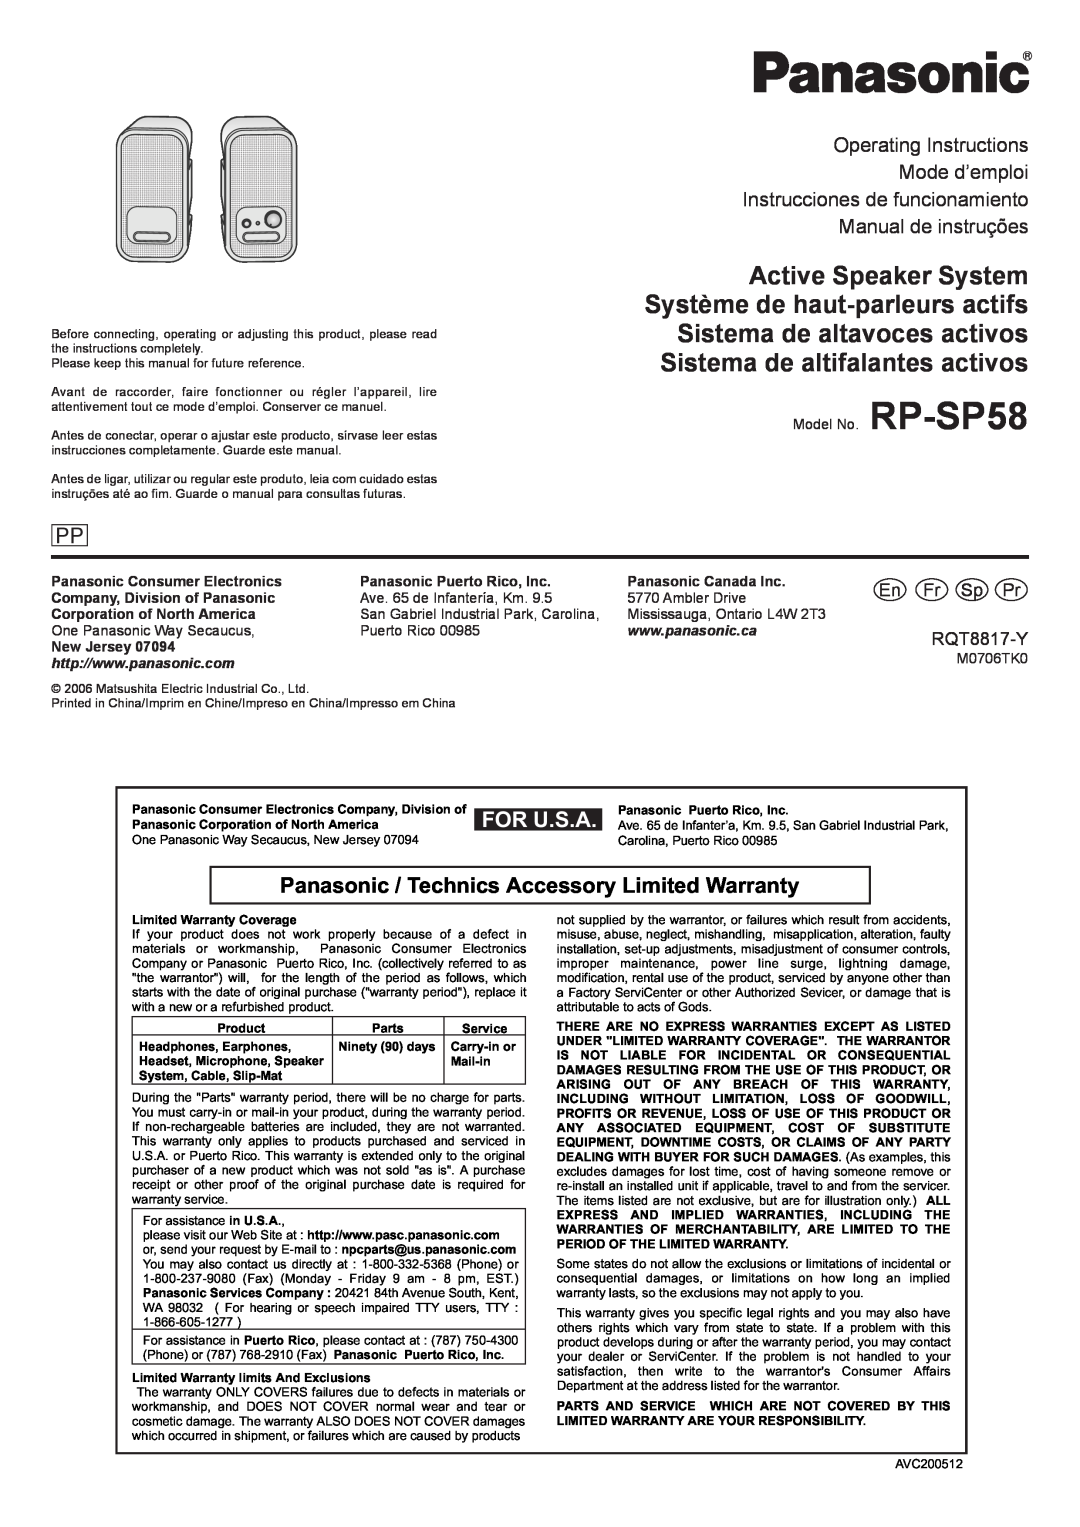 Panasonic SP58 warranty En Fr Sp Pr, RQT8817-Y, For U.S.A, Panasonic / Technics Accessory Limited Warranty 